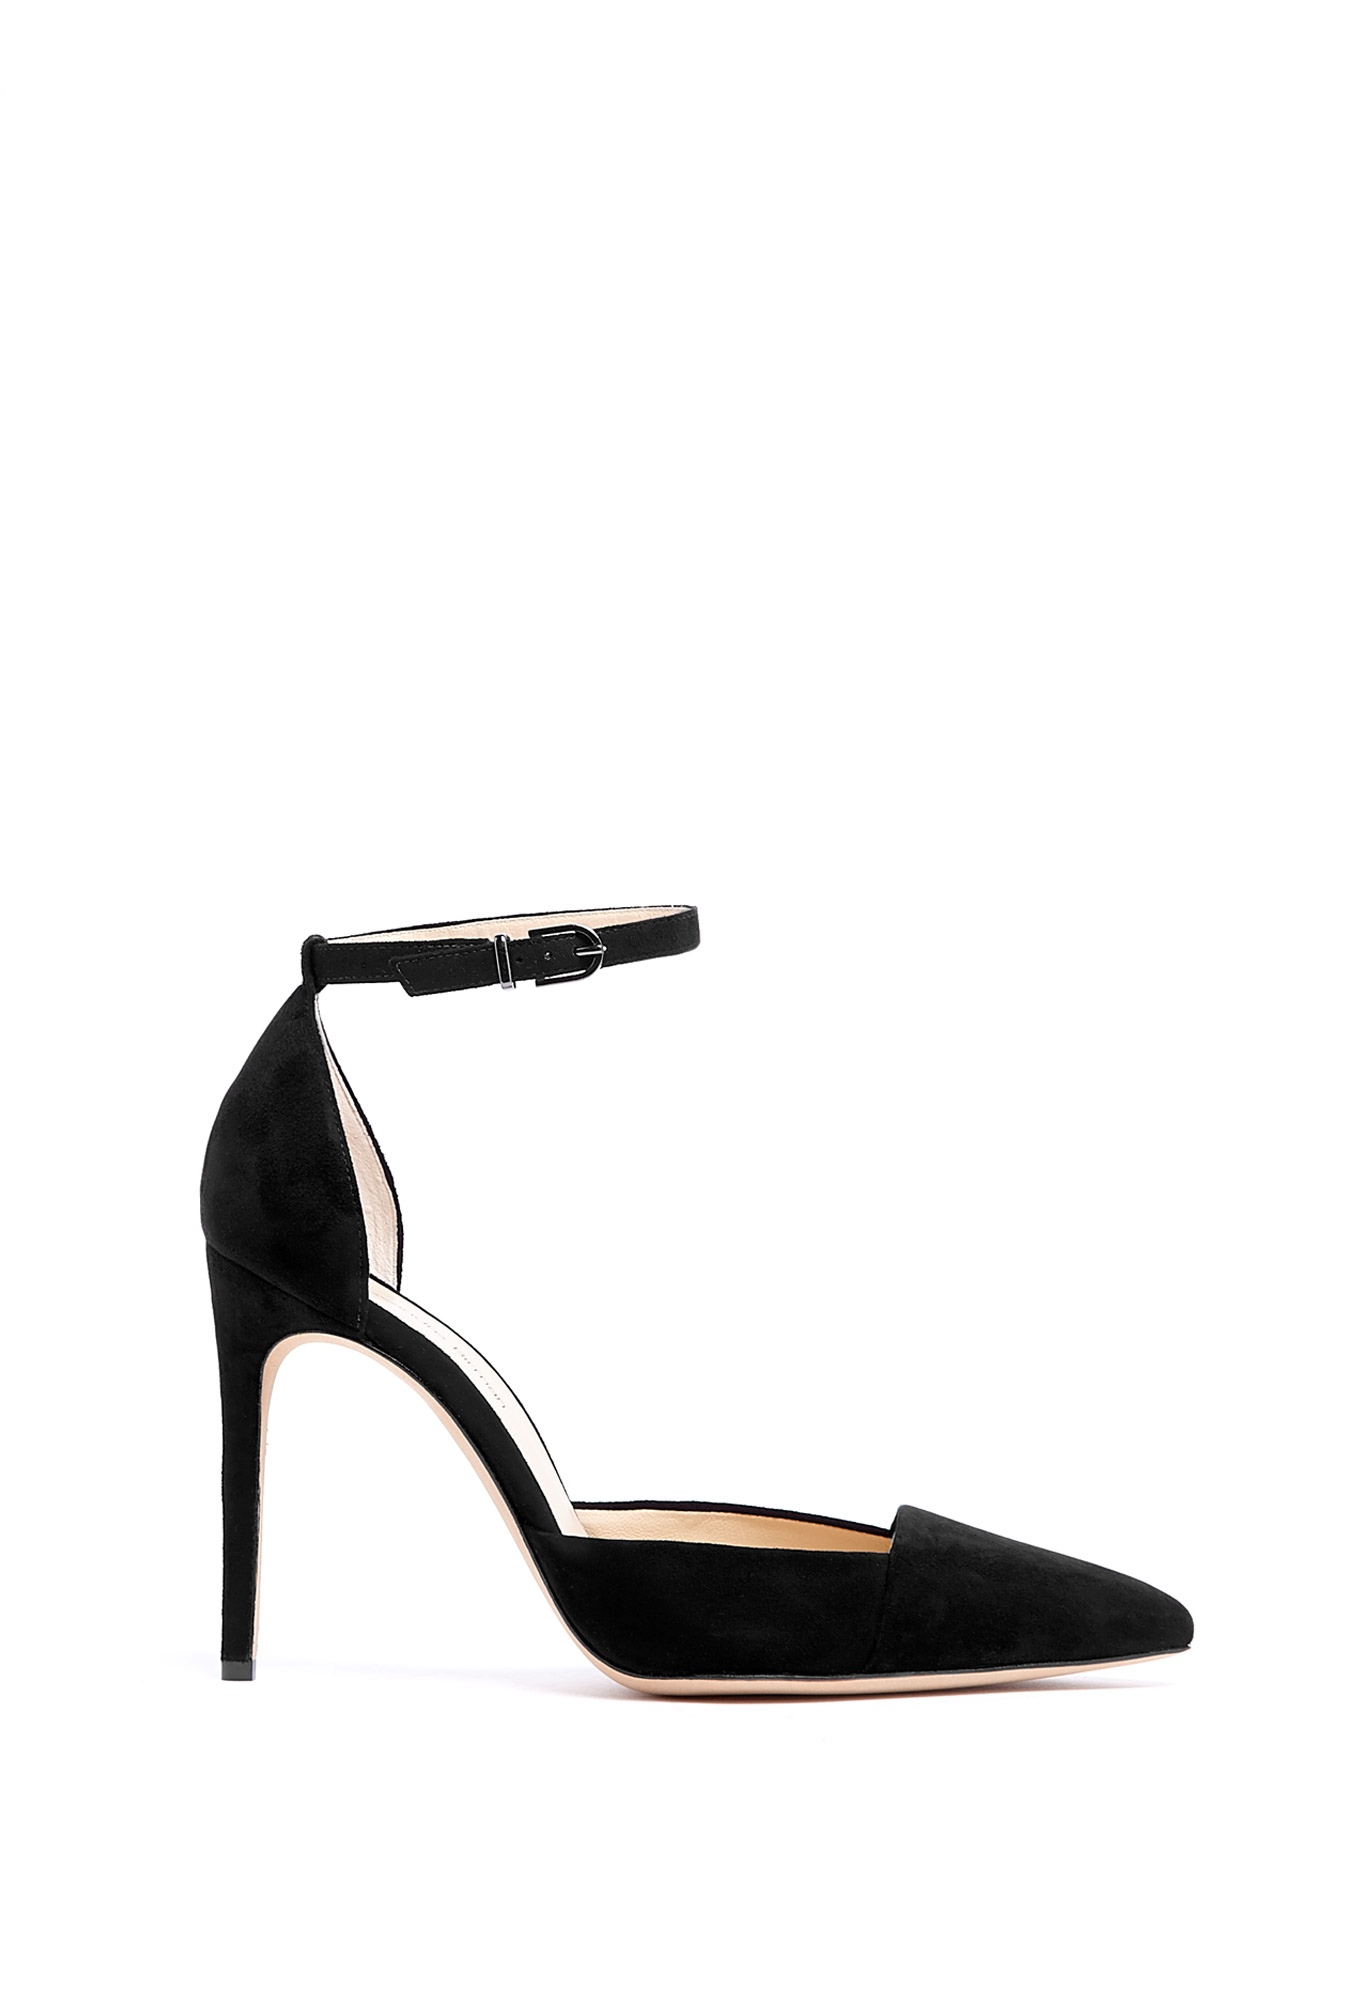 Alexandre Birman Ankle Strap Court Shoes in Black | Lyst